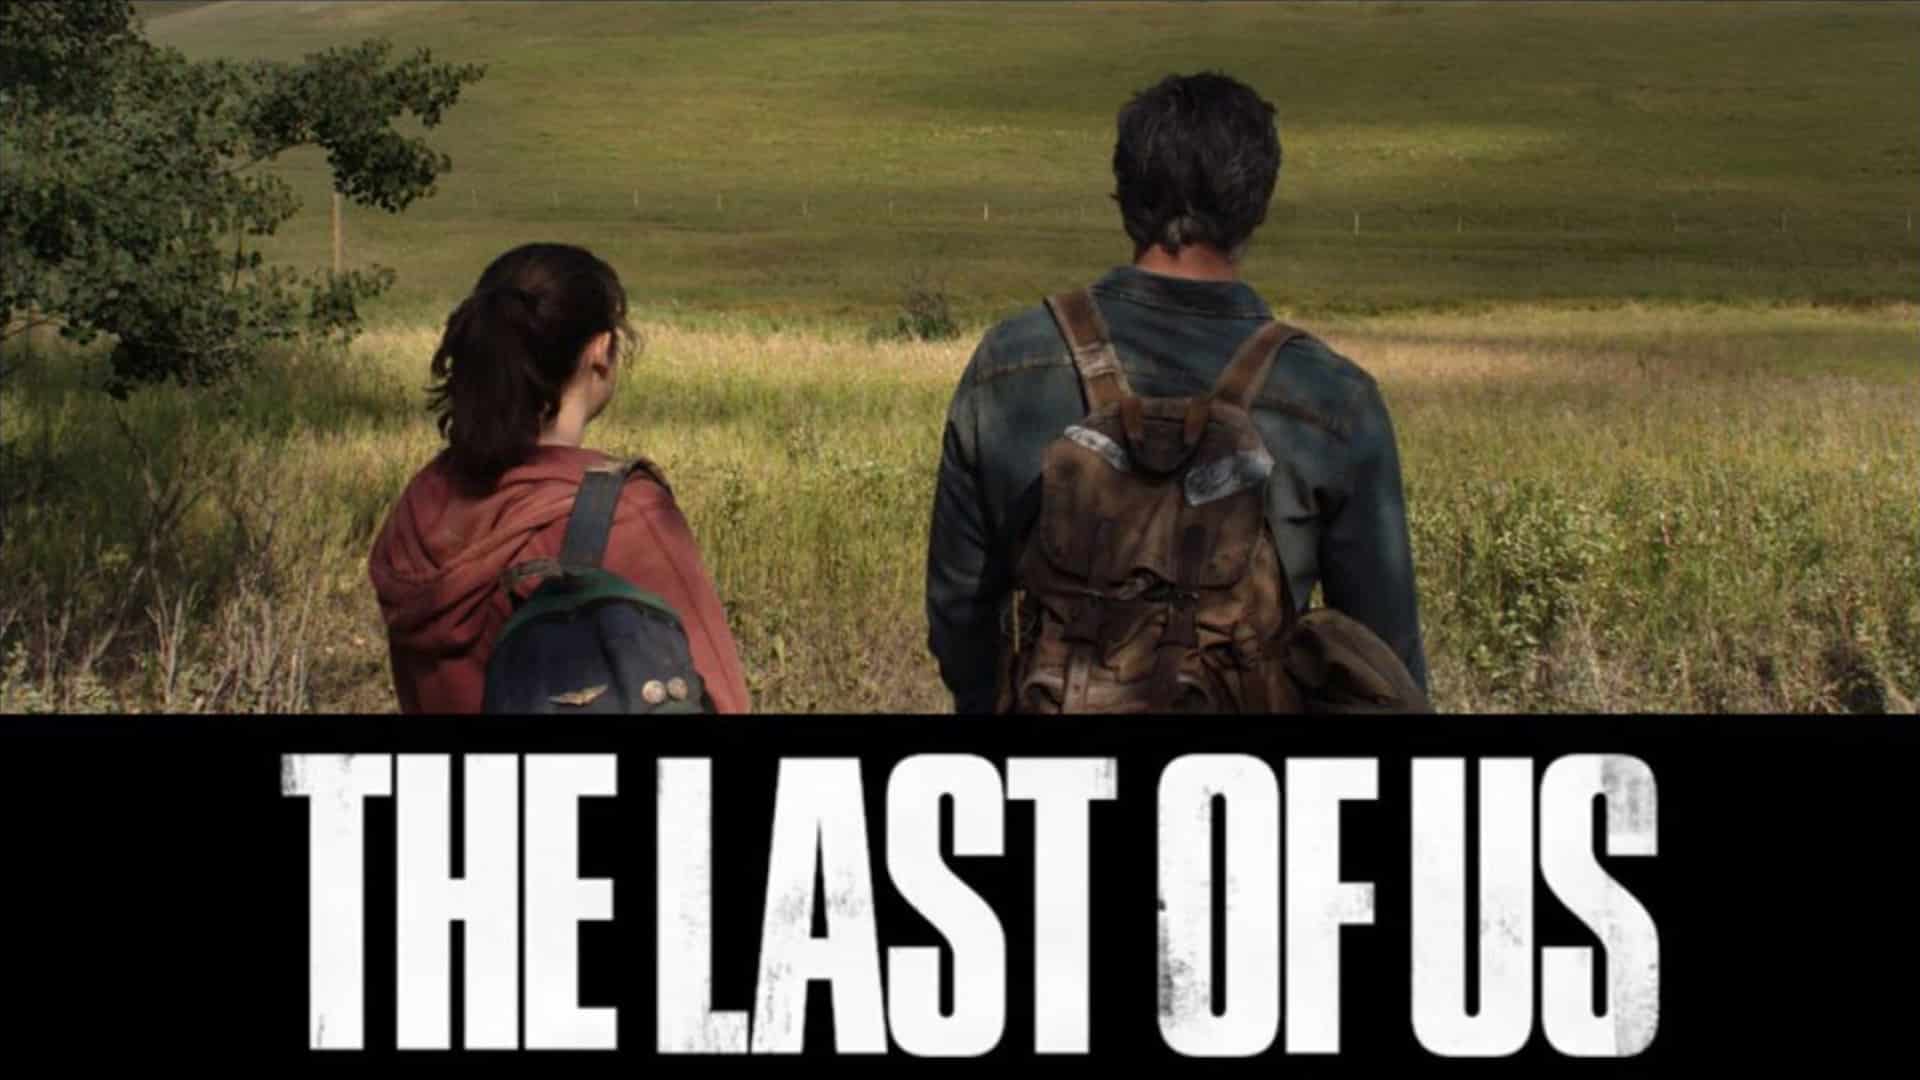 Seriál The Last of Us